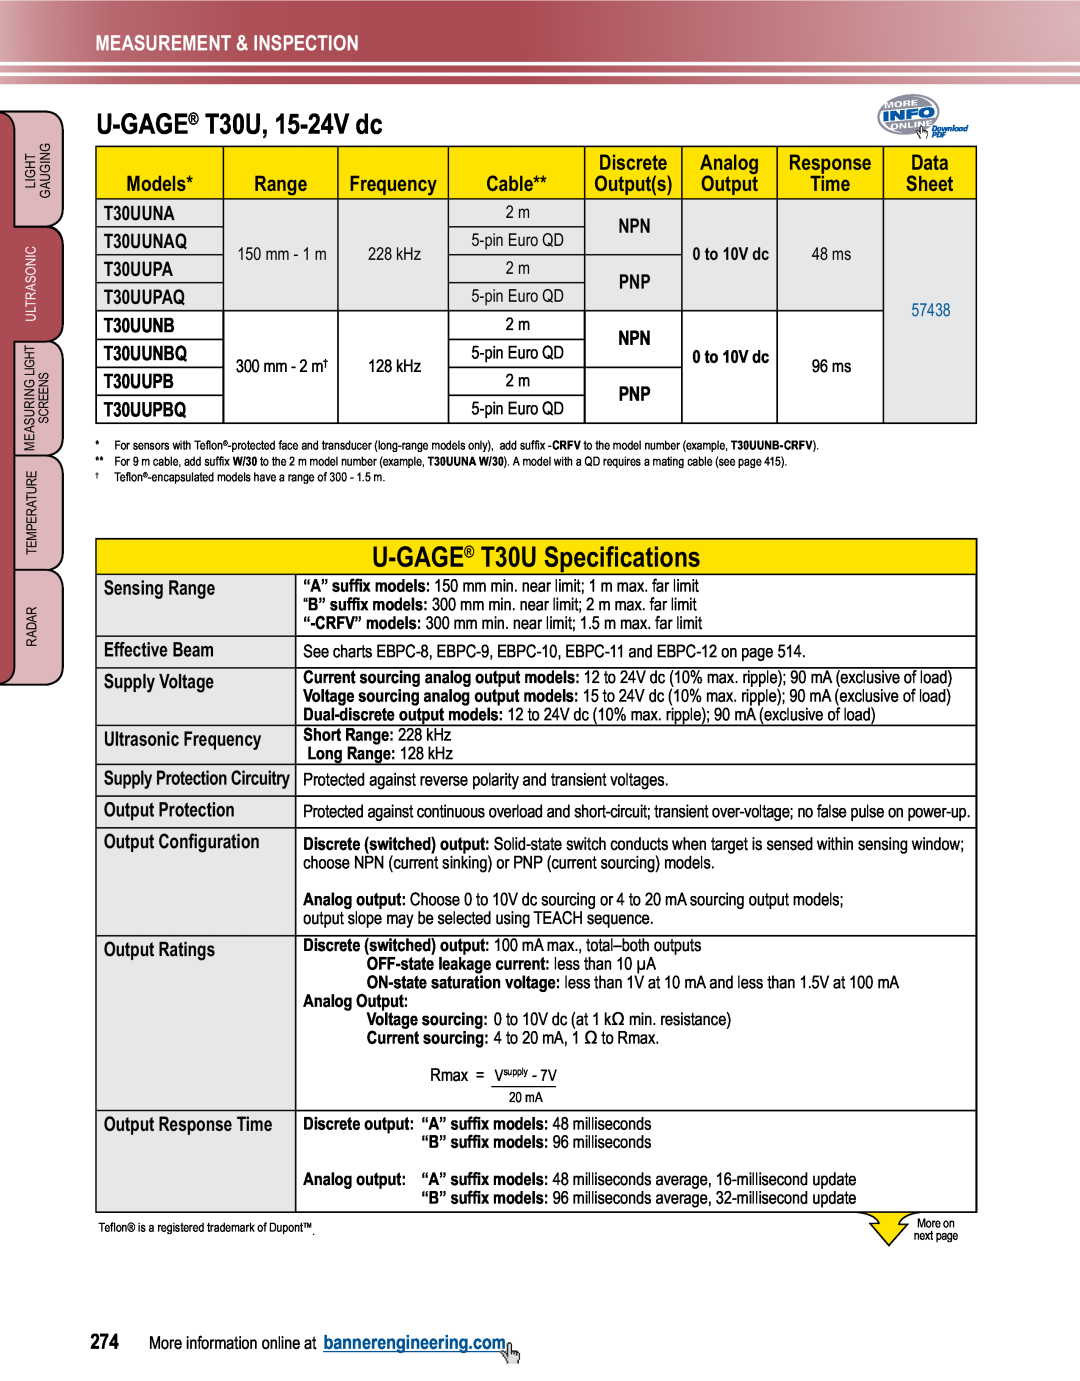 Banner L-GAGE manual T30U, 15-24V dc, U-GAGE T30U Specifications, U-Gage, Measurement & Inspection, 20 mA 